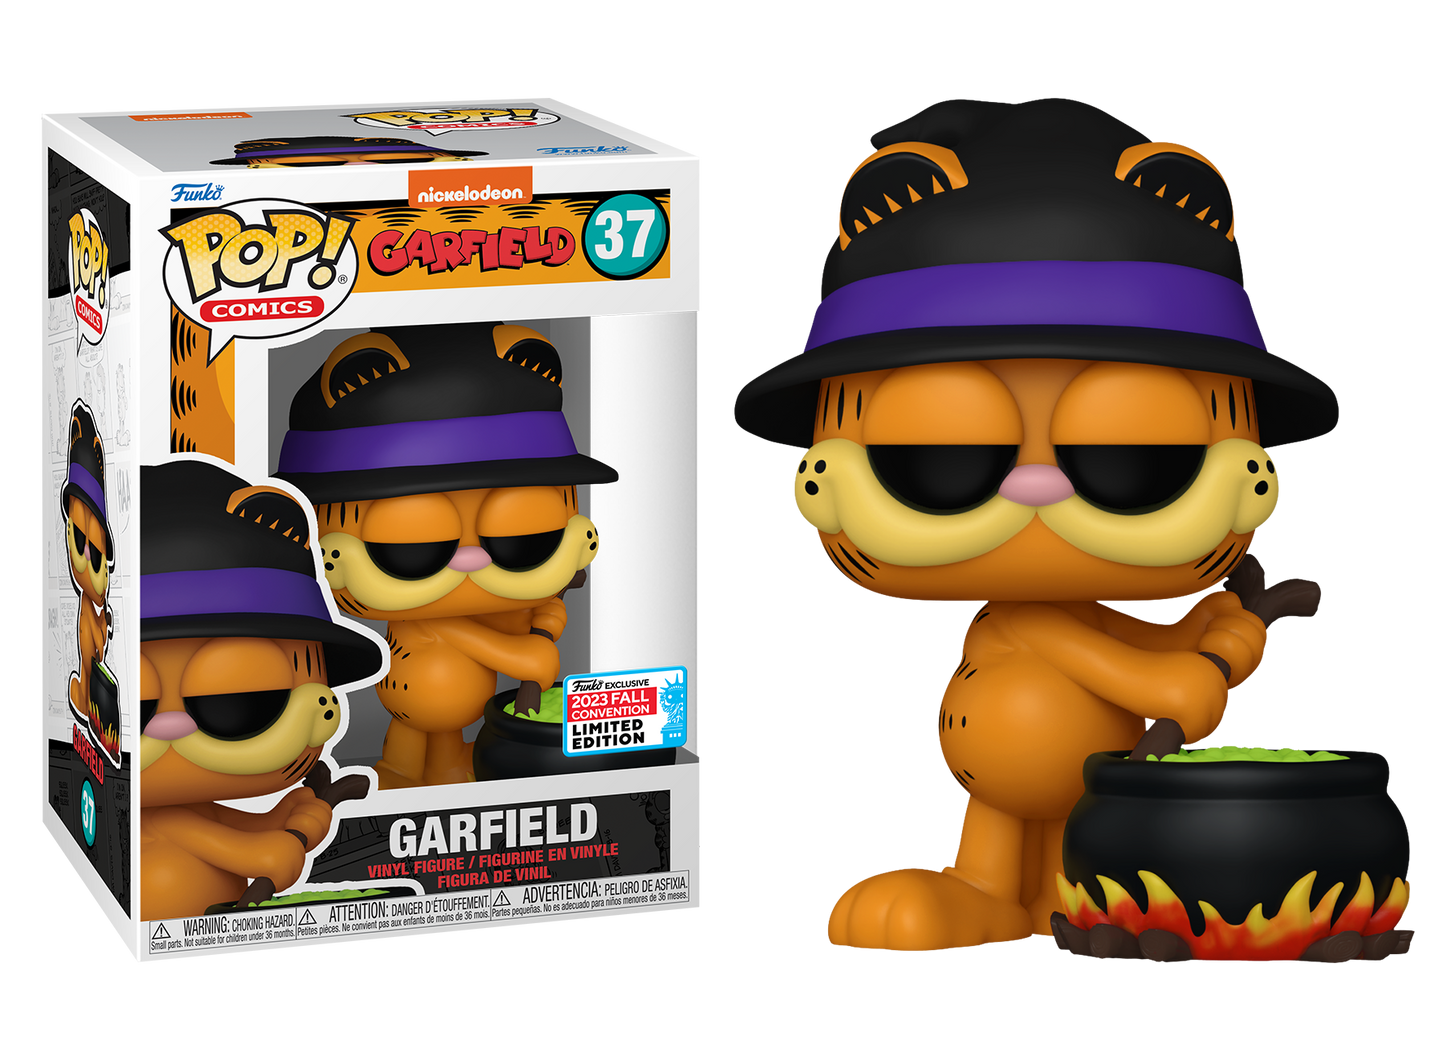 Garfield - Garfield with Cauldron (Comics) NYCC 2023 Fall Convention Exclusive Pop! Vinyl